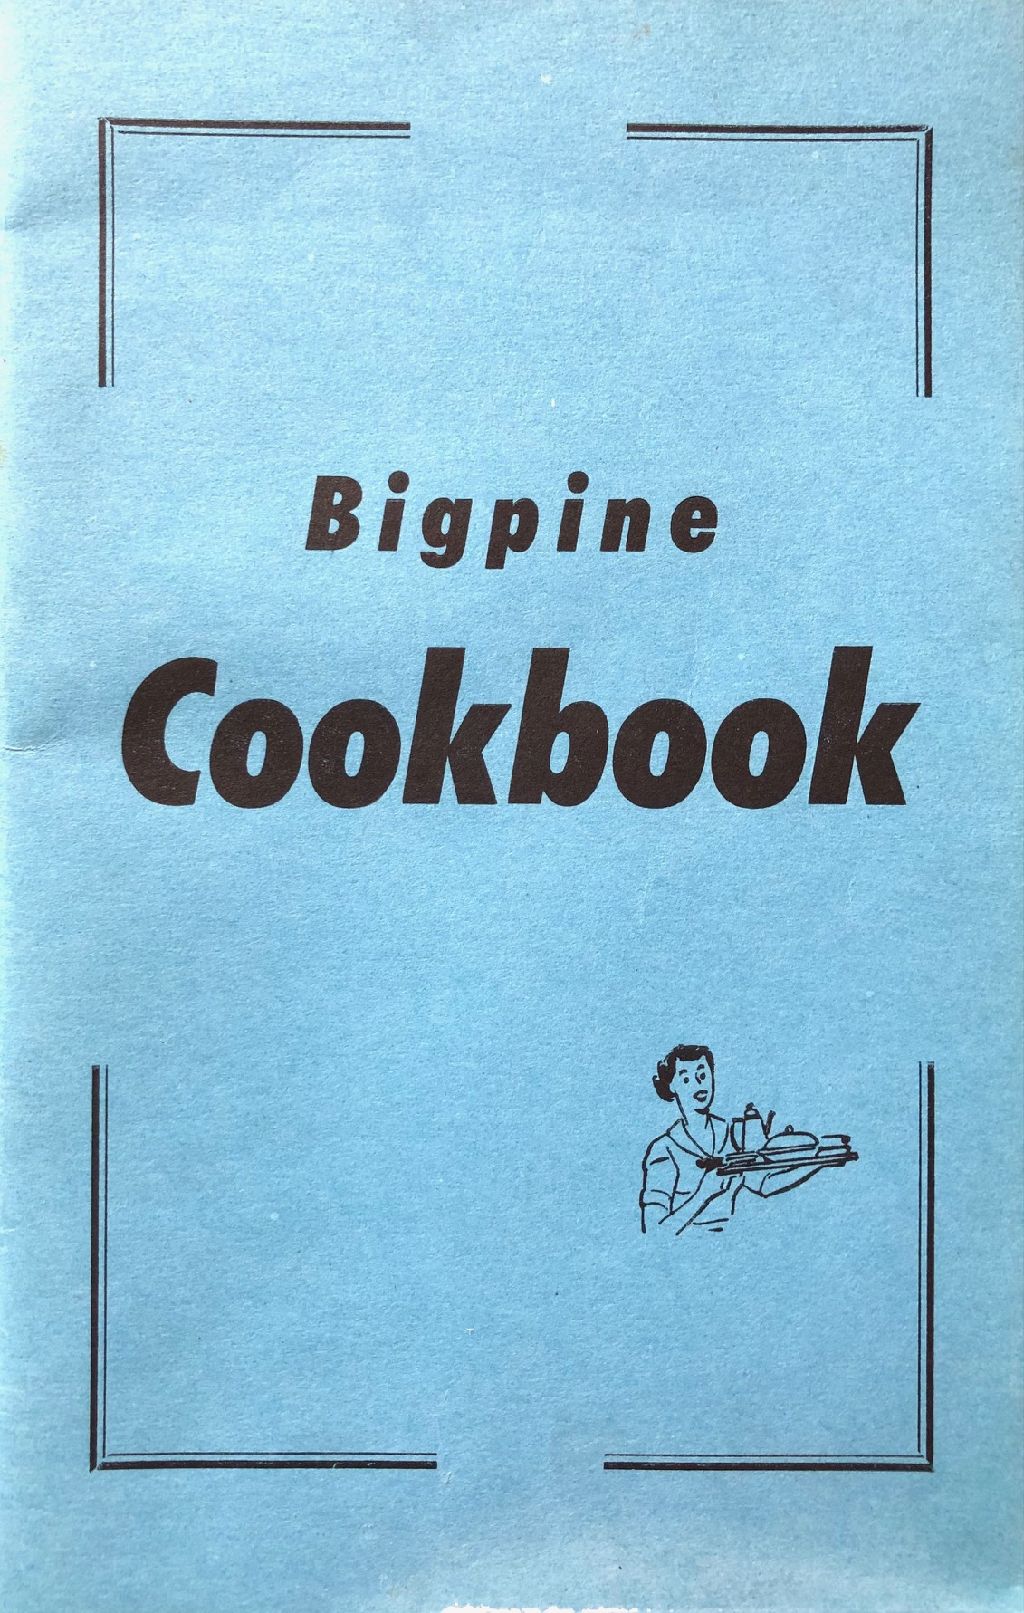 (California - Bigpine) Woman's Society of Christian Service. Bigpine Cookbook